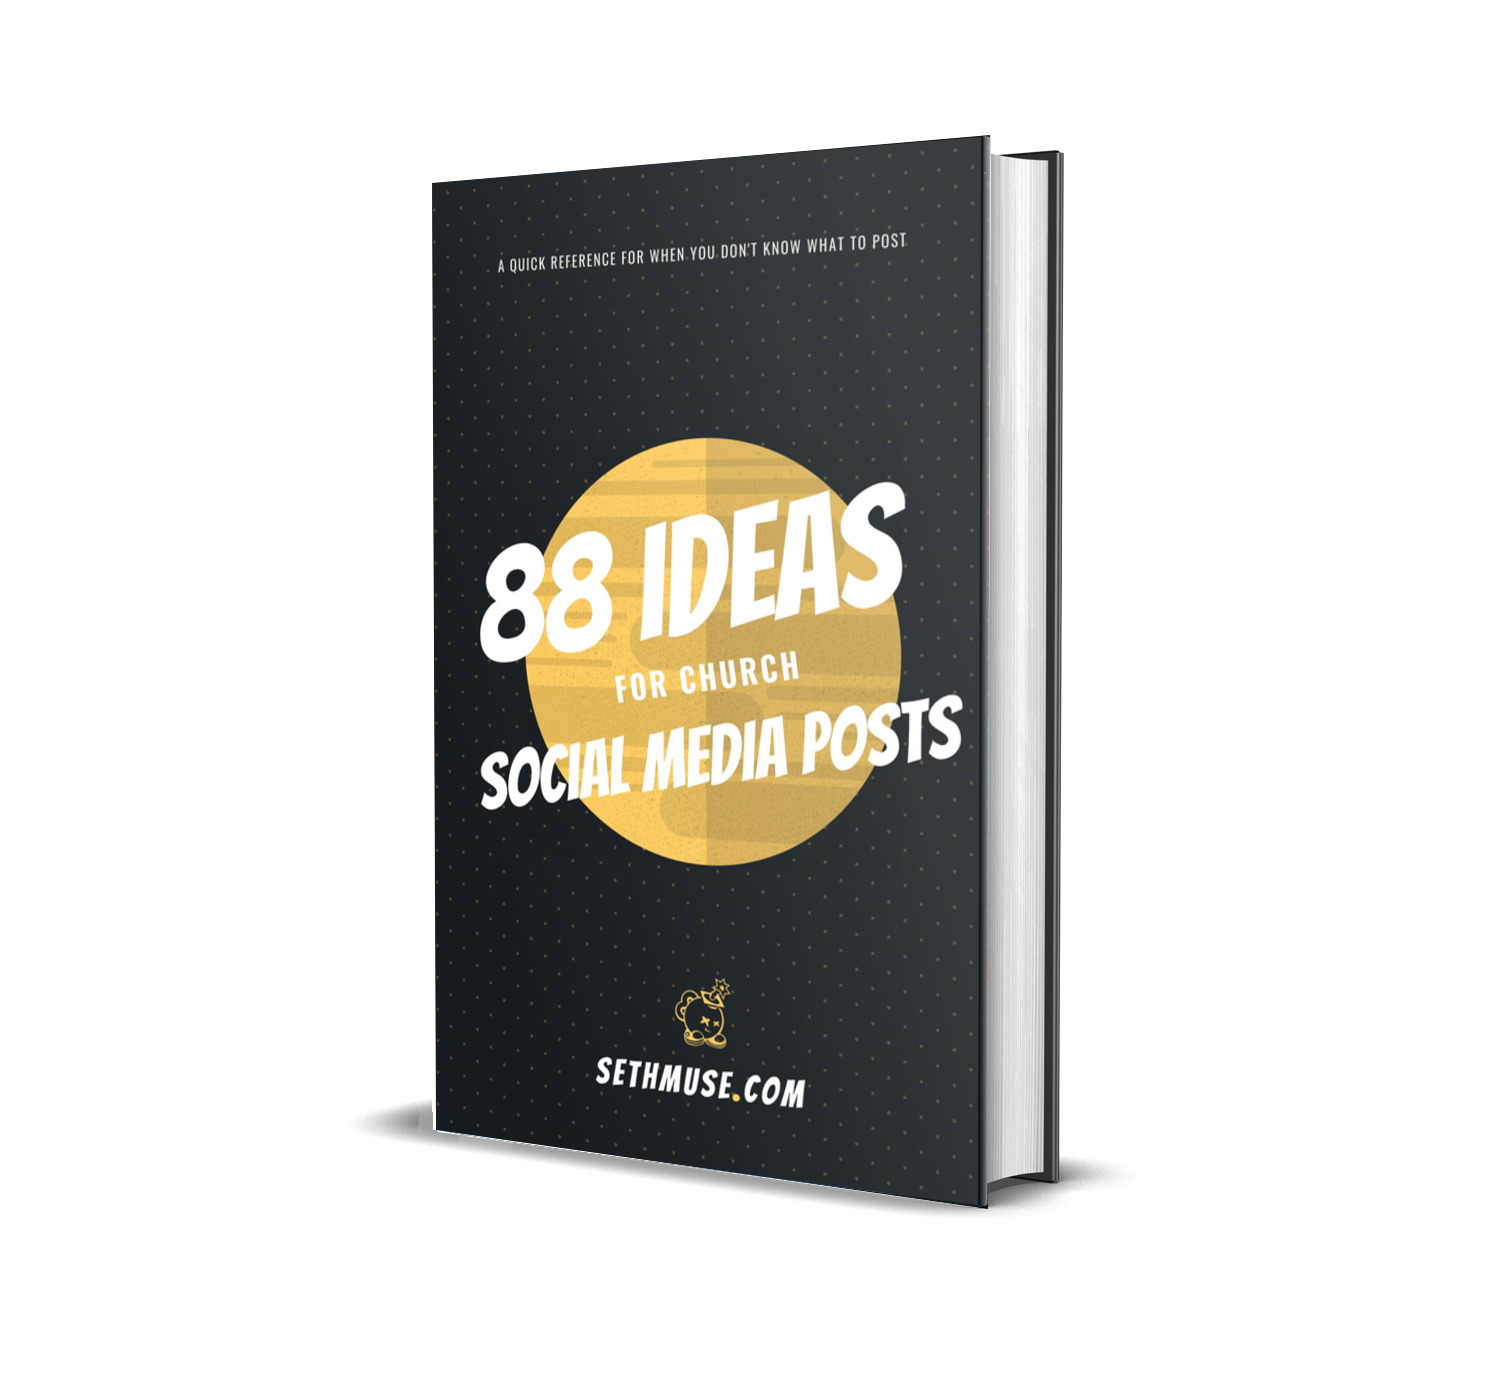 88 ideas for church social media posts, church communications